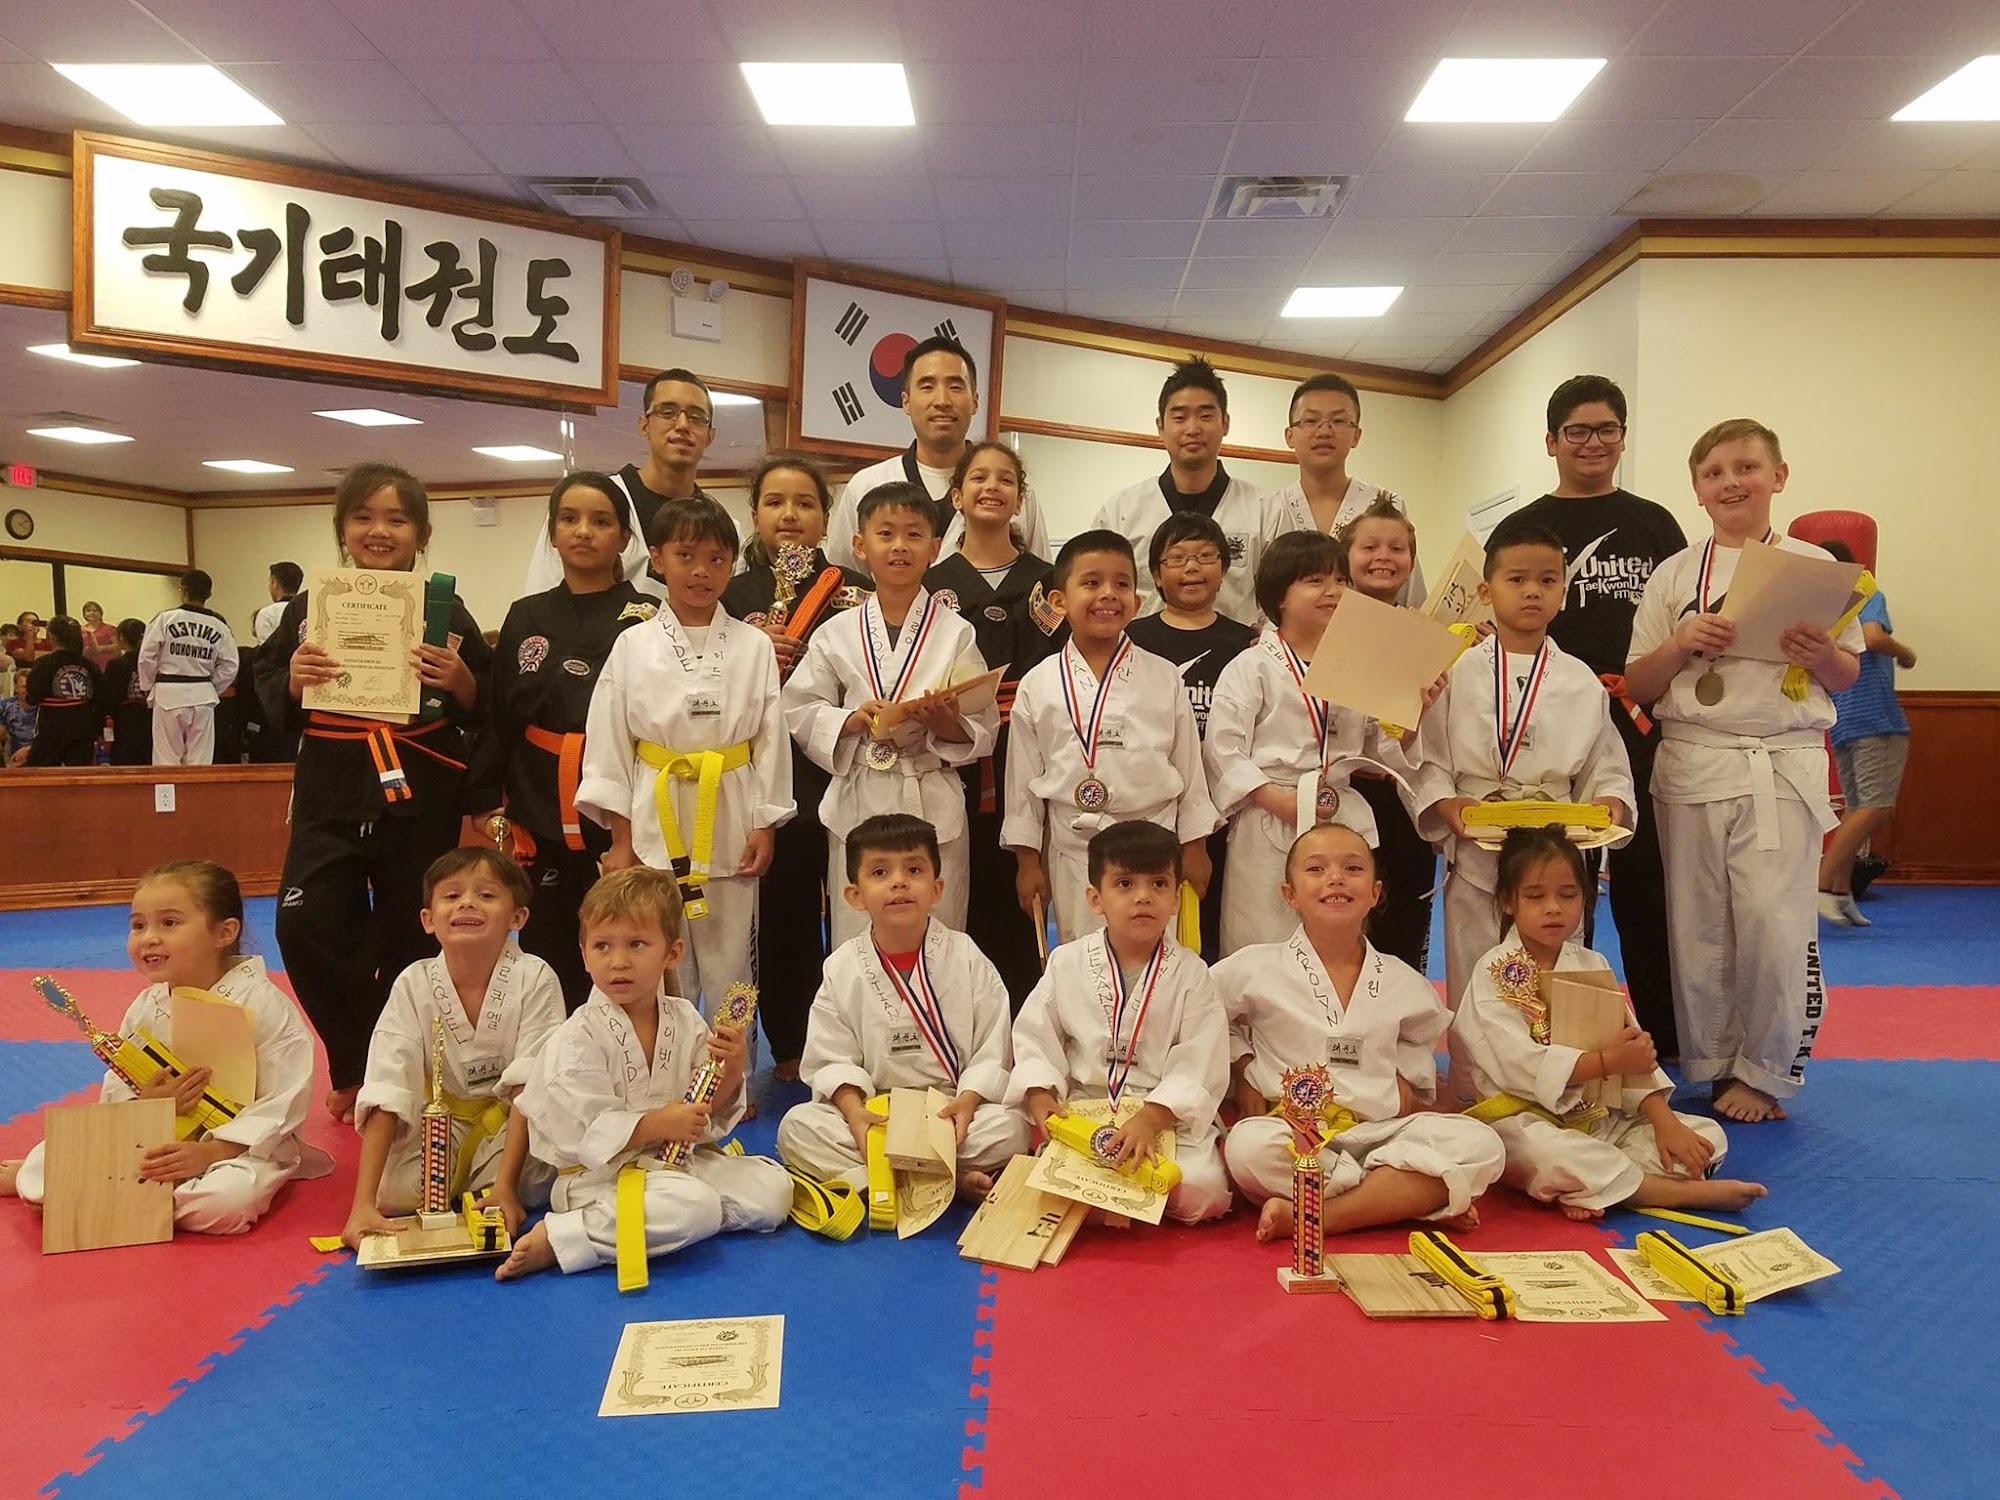 United taekwondo center 55-40 69th Pl, Maspeth New York 11378